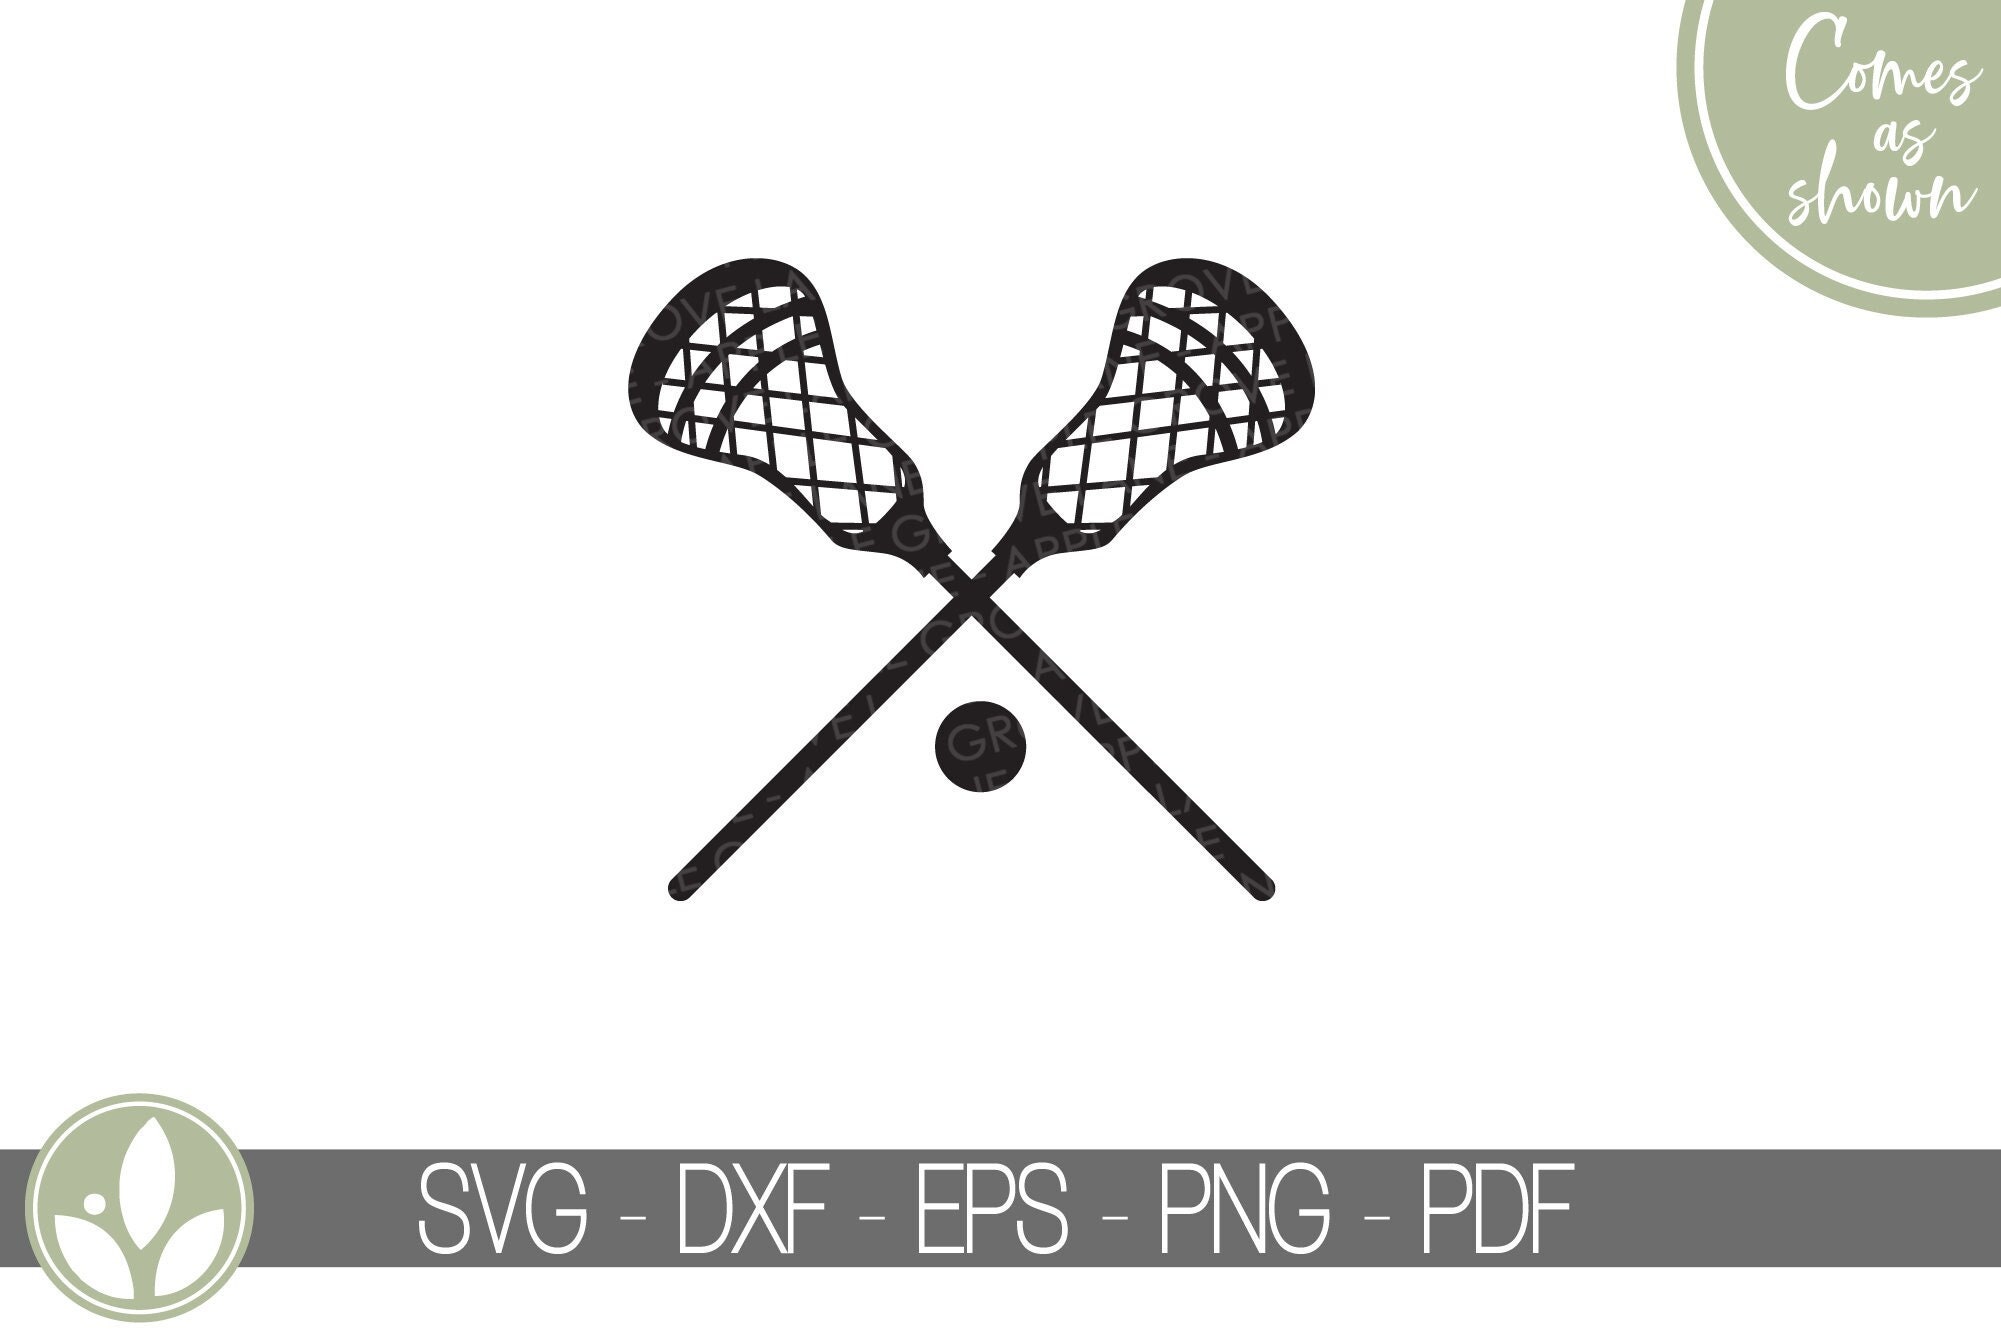 Lacrosse Stick Svg Lacrosse Stick Silhouette Lacrosse Stick Cut File Lacrosse  Stick Clipart Svg Eps Dxf Png Jpg 